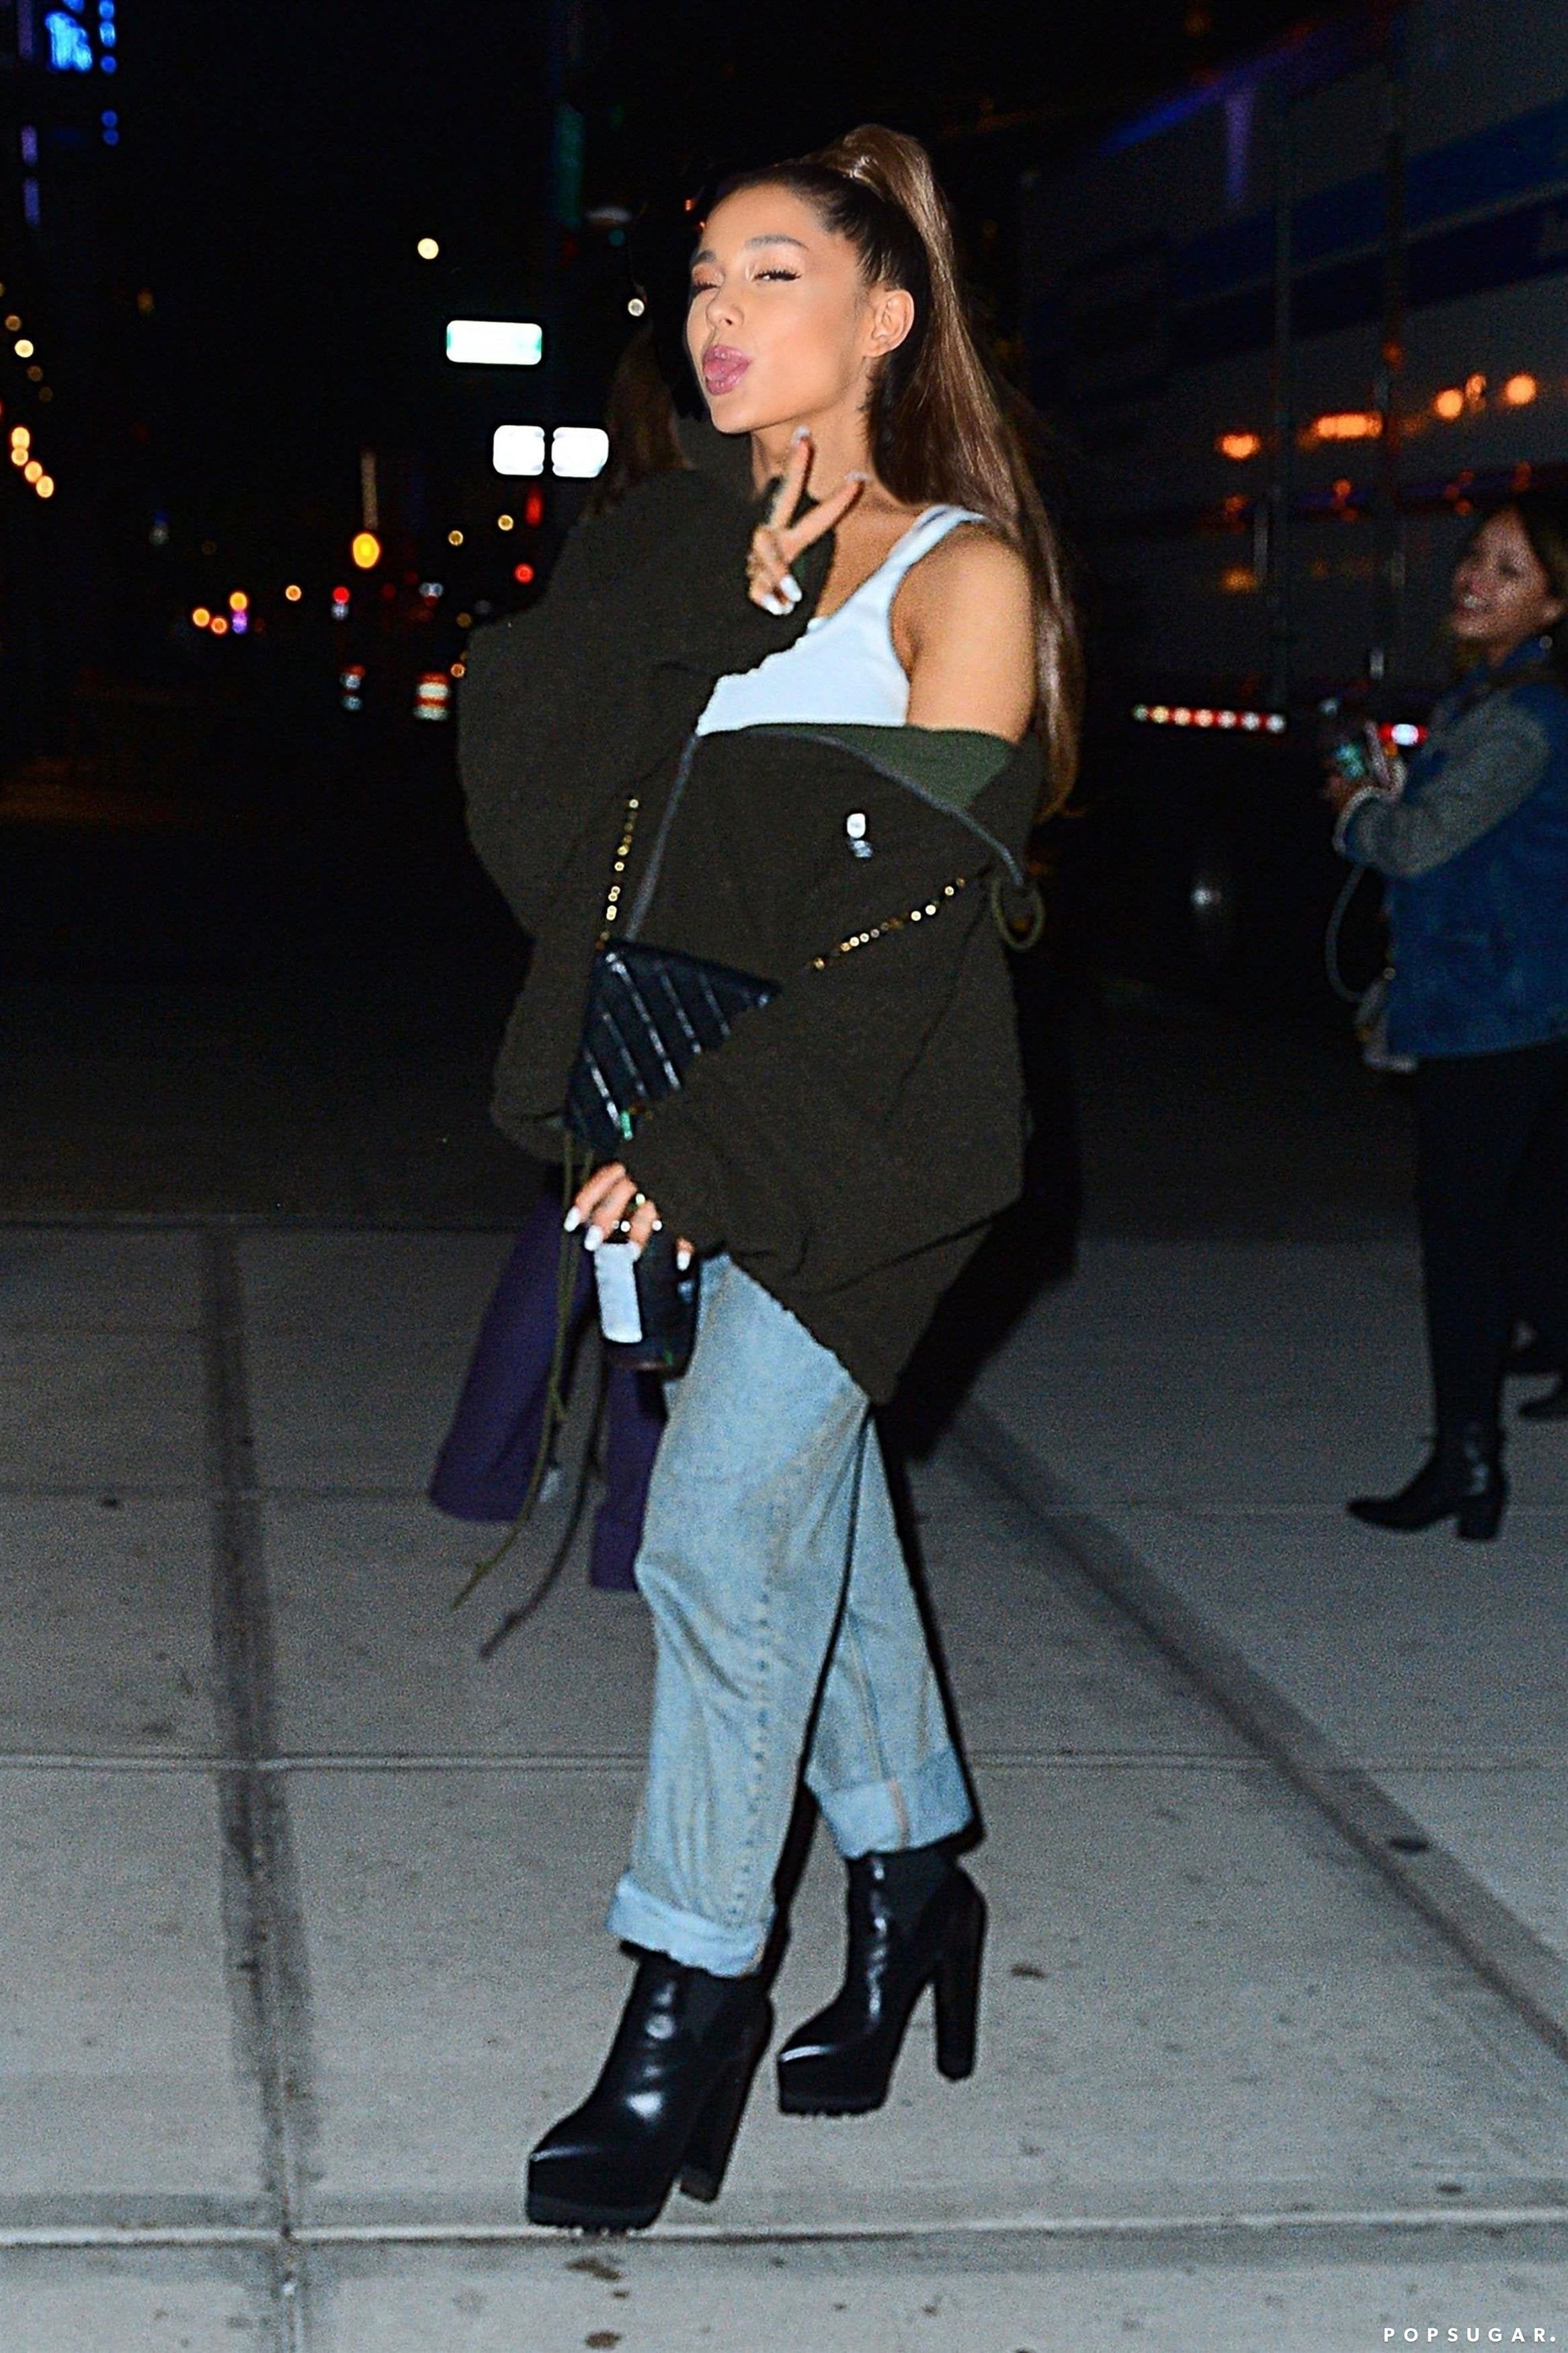 Ariana Grande Sweetener Tour Tote Bags